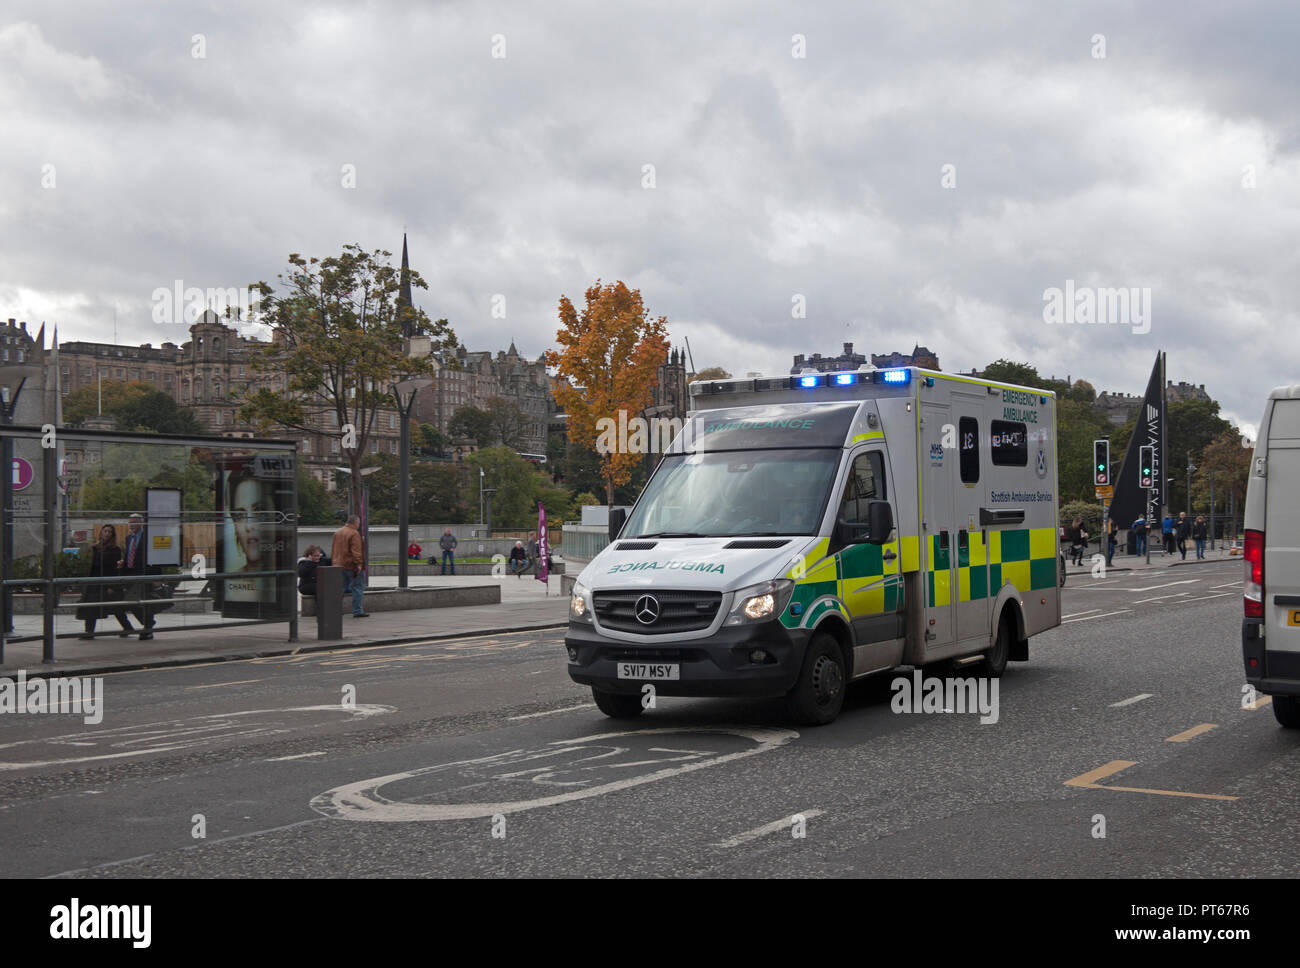 Ambulance with blue lights speeding in 20 zone on emergency response, Princes Street, Edinburgh, Scotland, UK Stock Photo